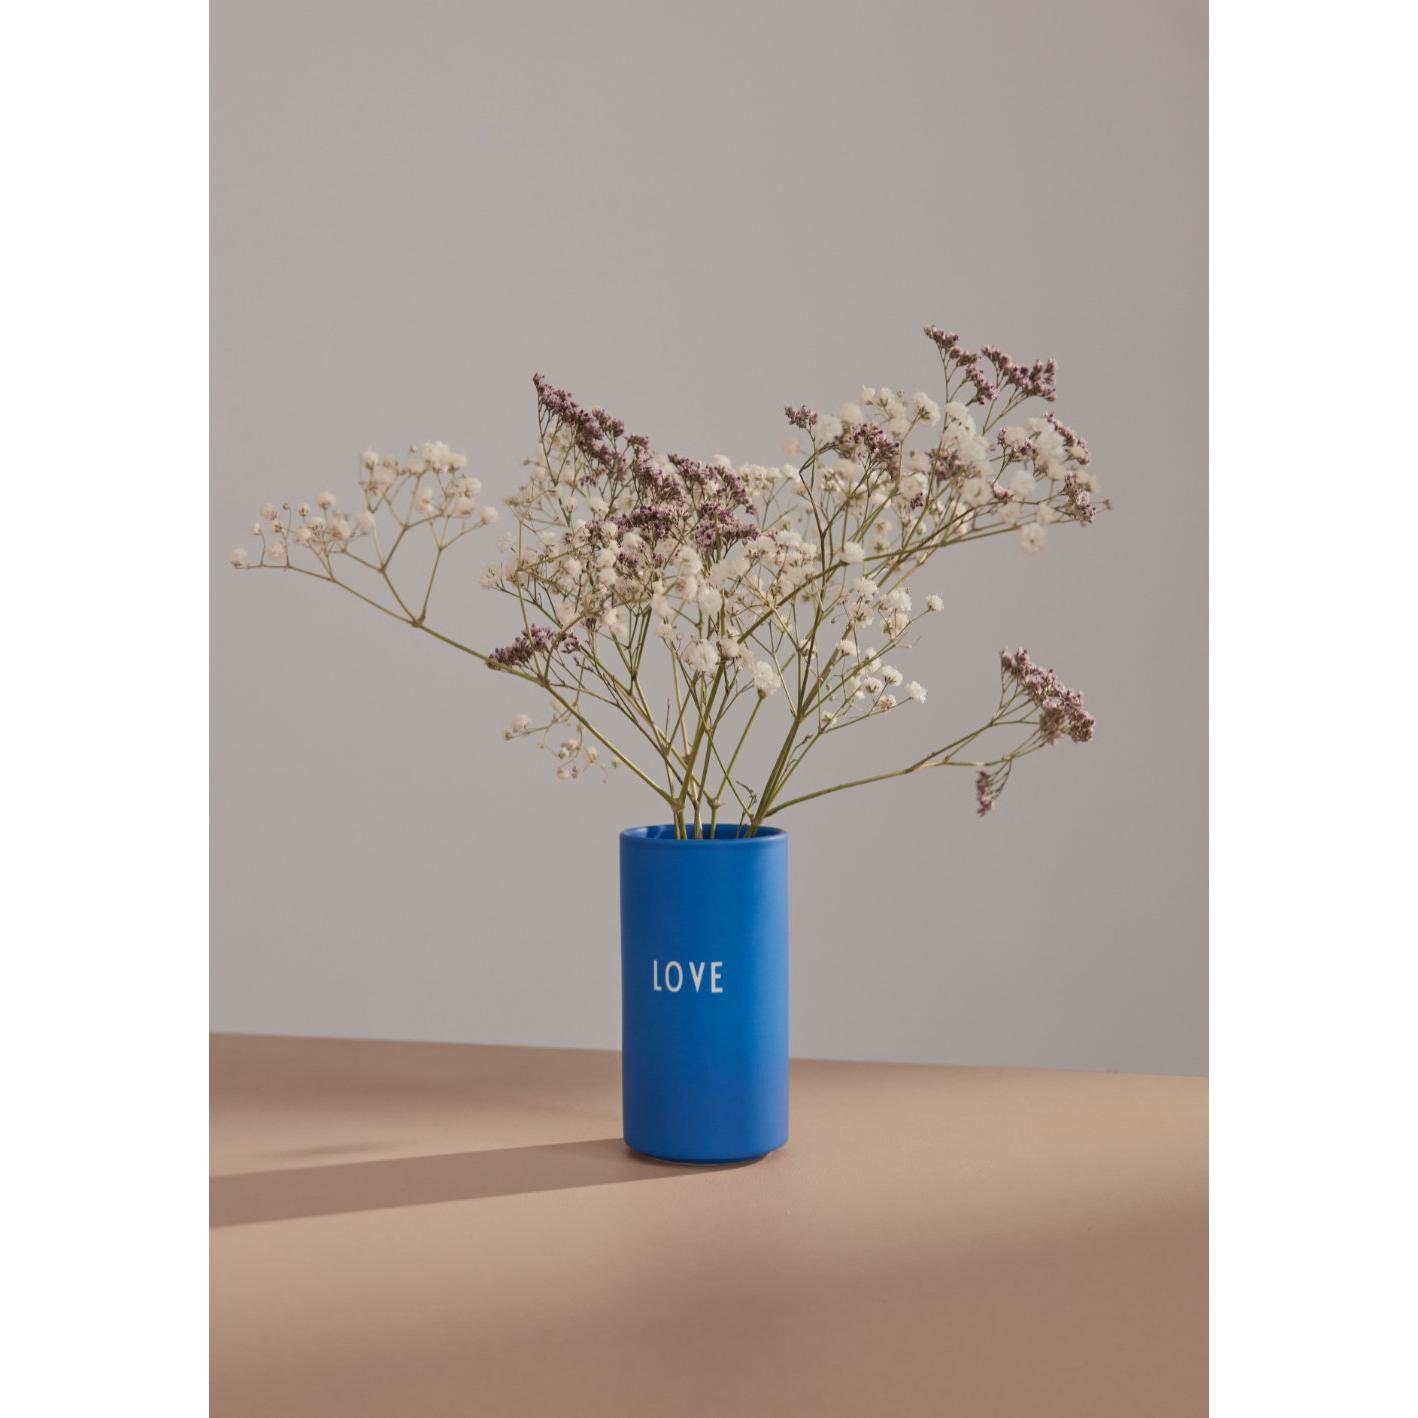 Dekovase Design Vase (11cm) Favourite Love Blau Letters